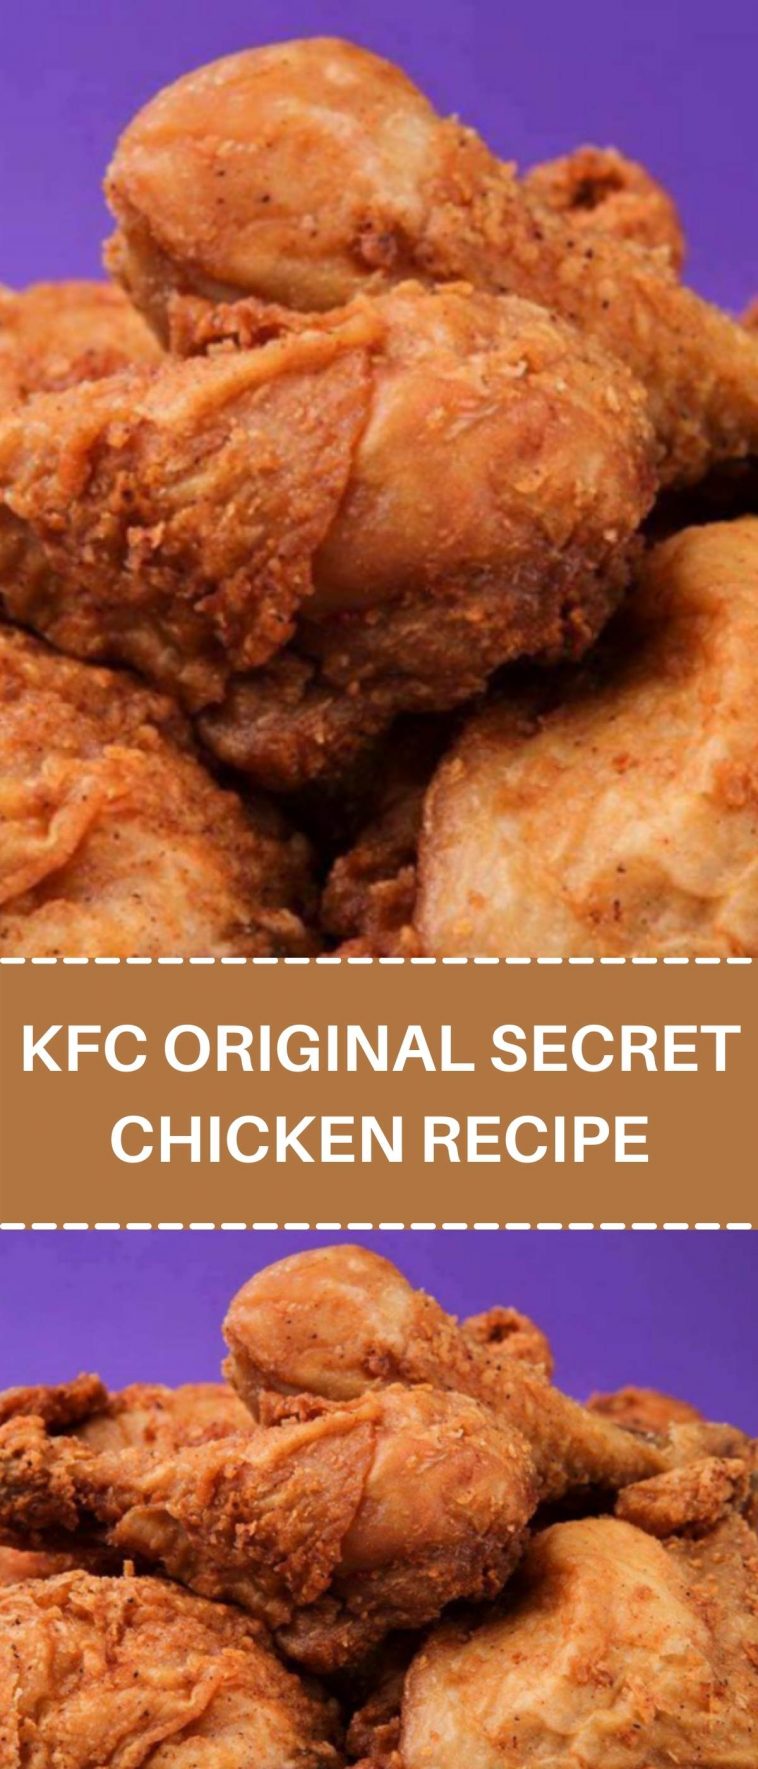 KFC ORIGINAL SECRET CHICKEN RECIPE